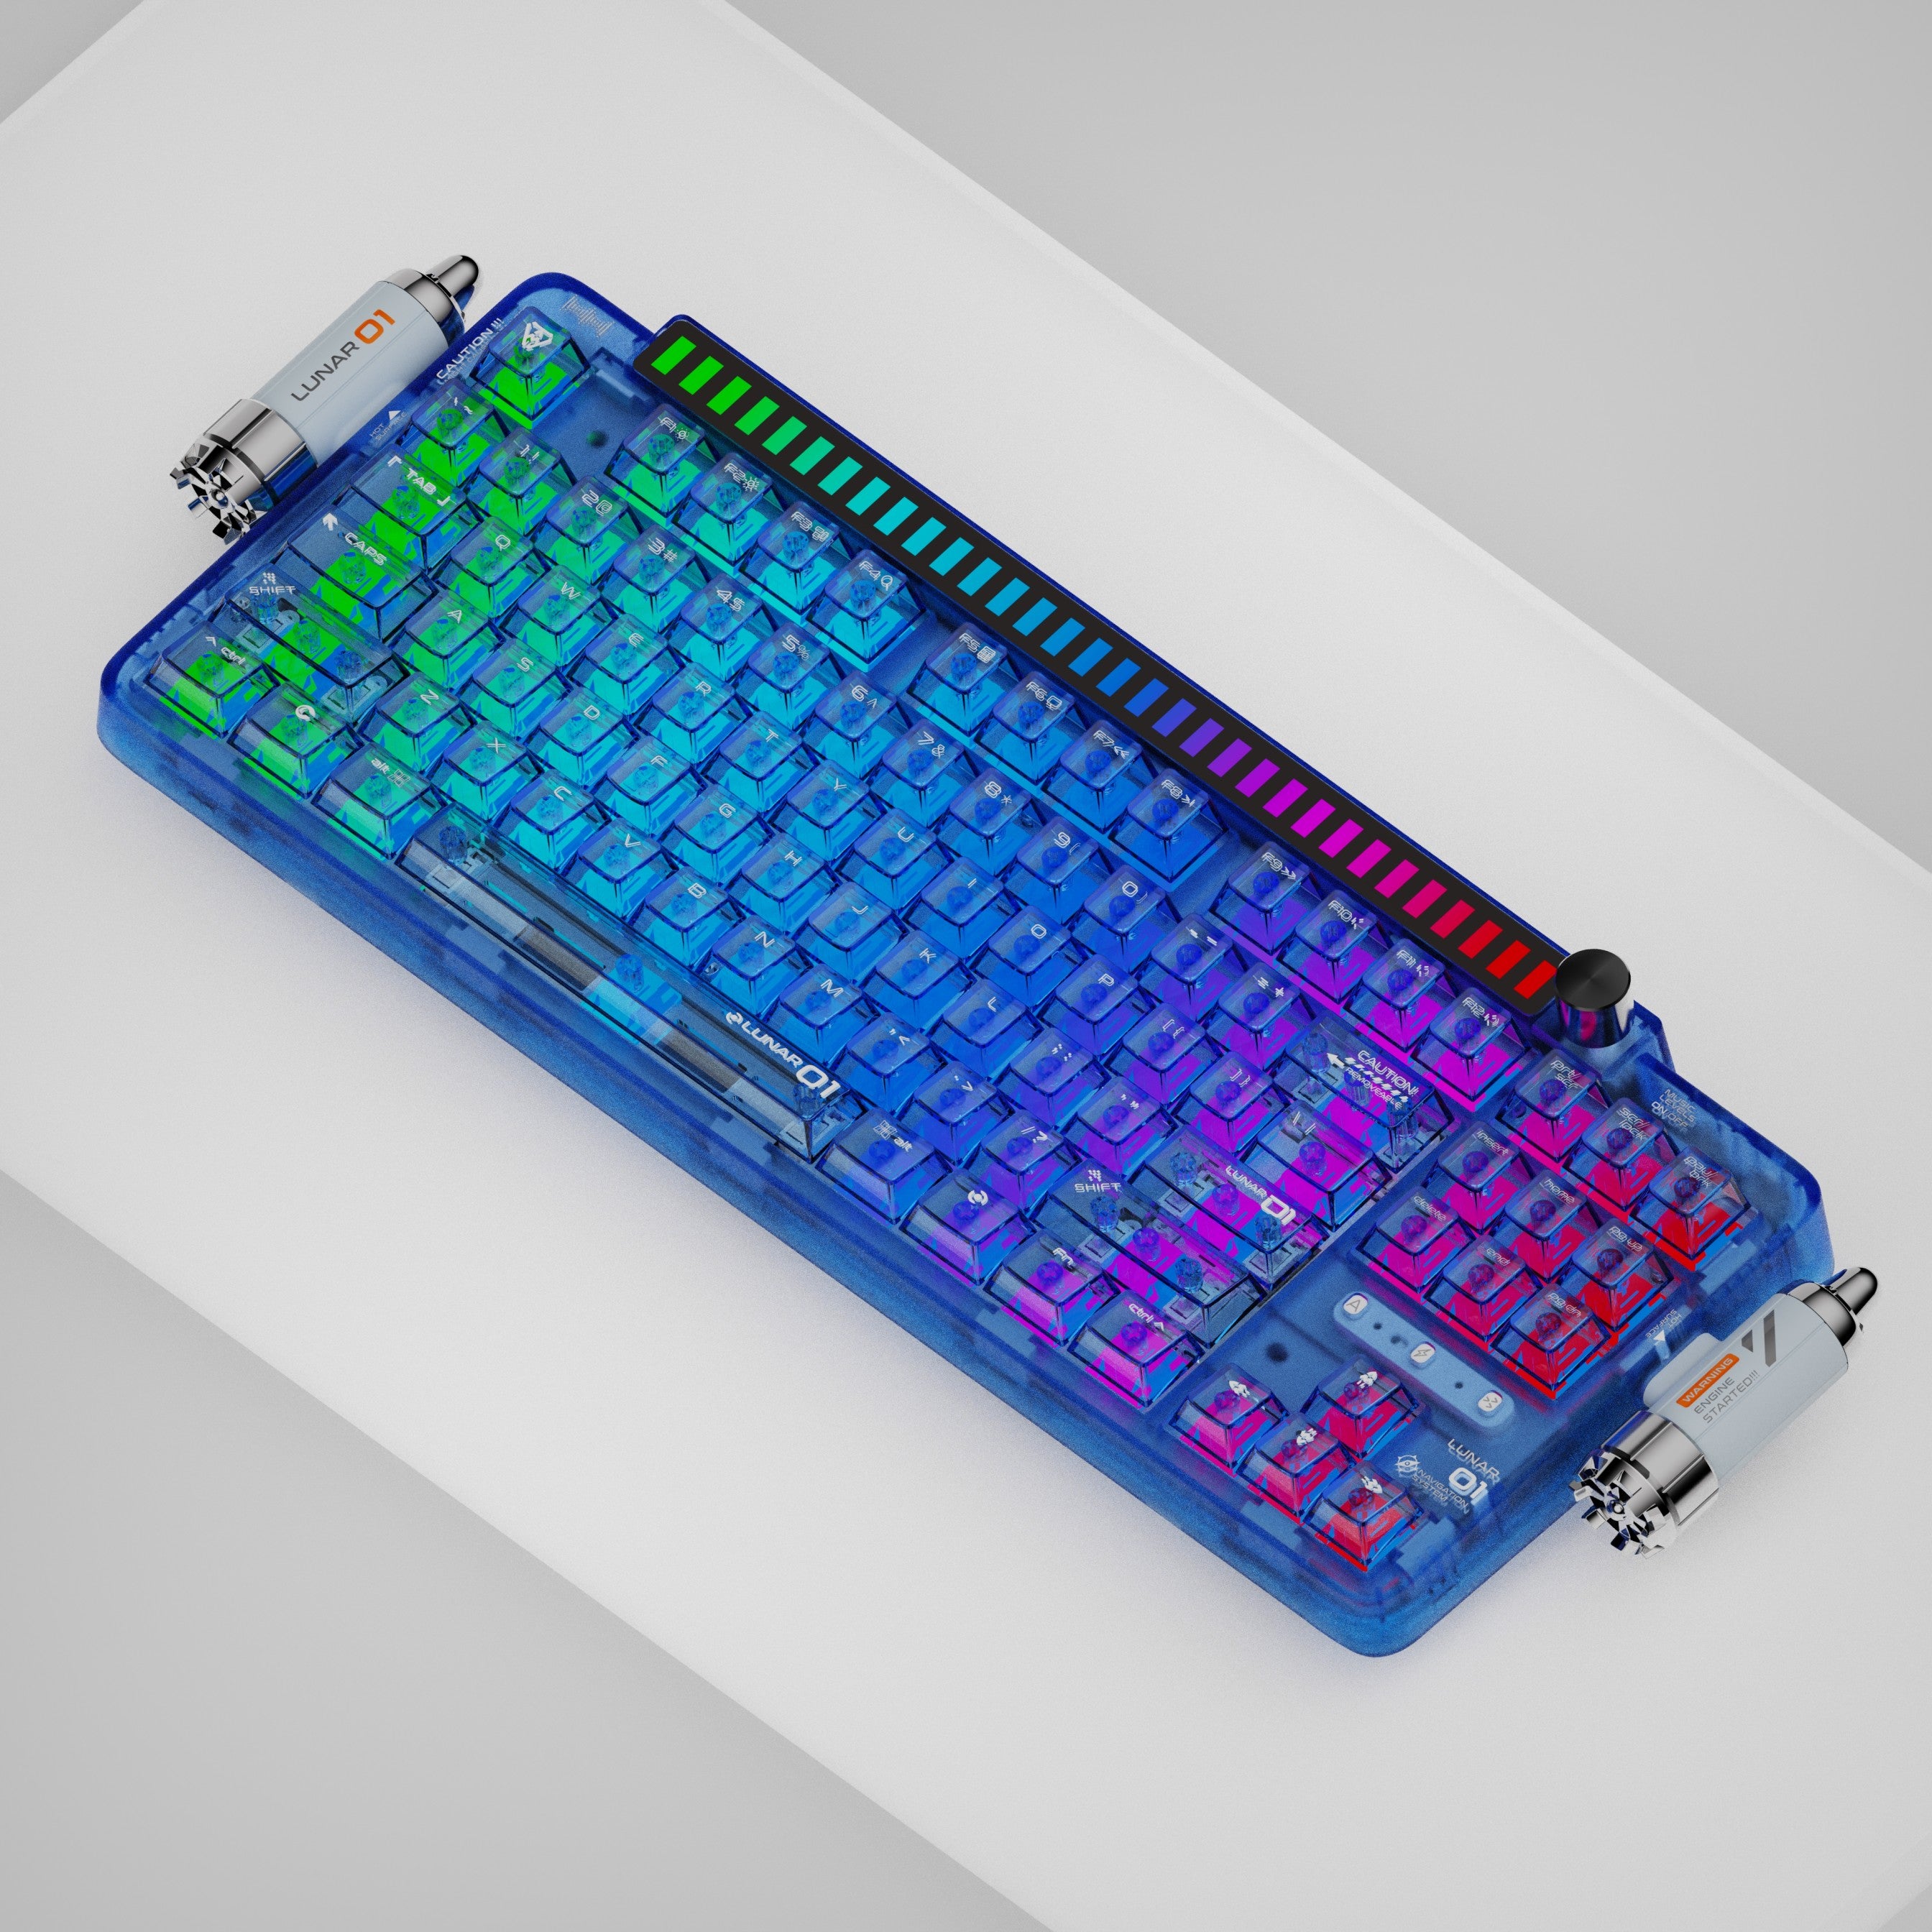 keysme lunar 01 spaceship wireless custom mechanical keyboard Gateron switches hot swappable crystal blue